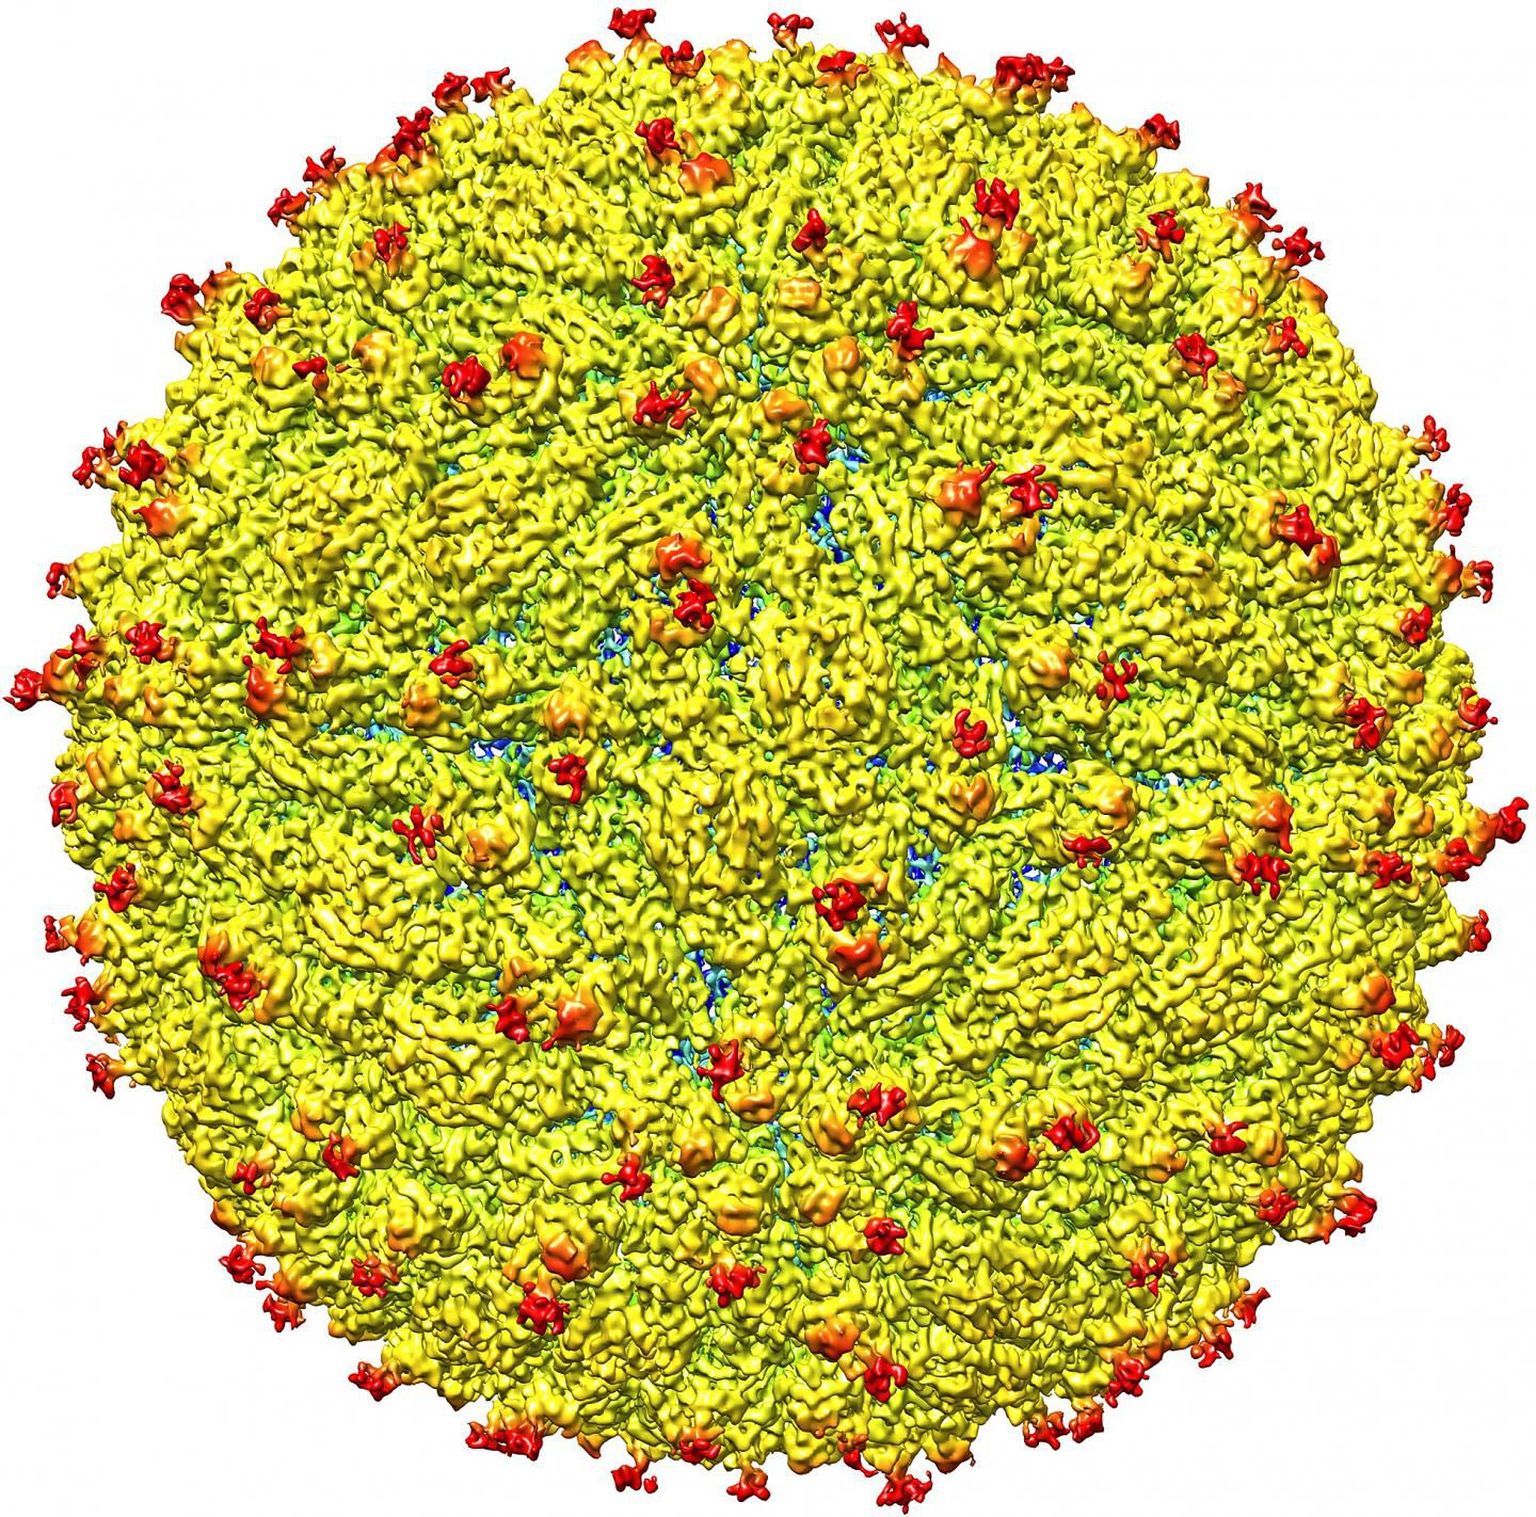 Zika viirus mikroskoobi all.